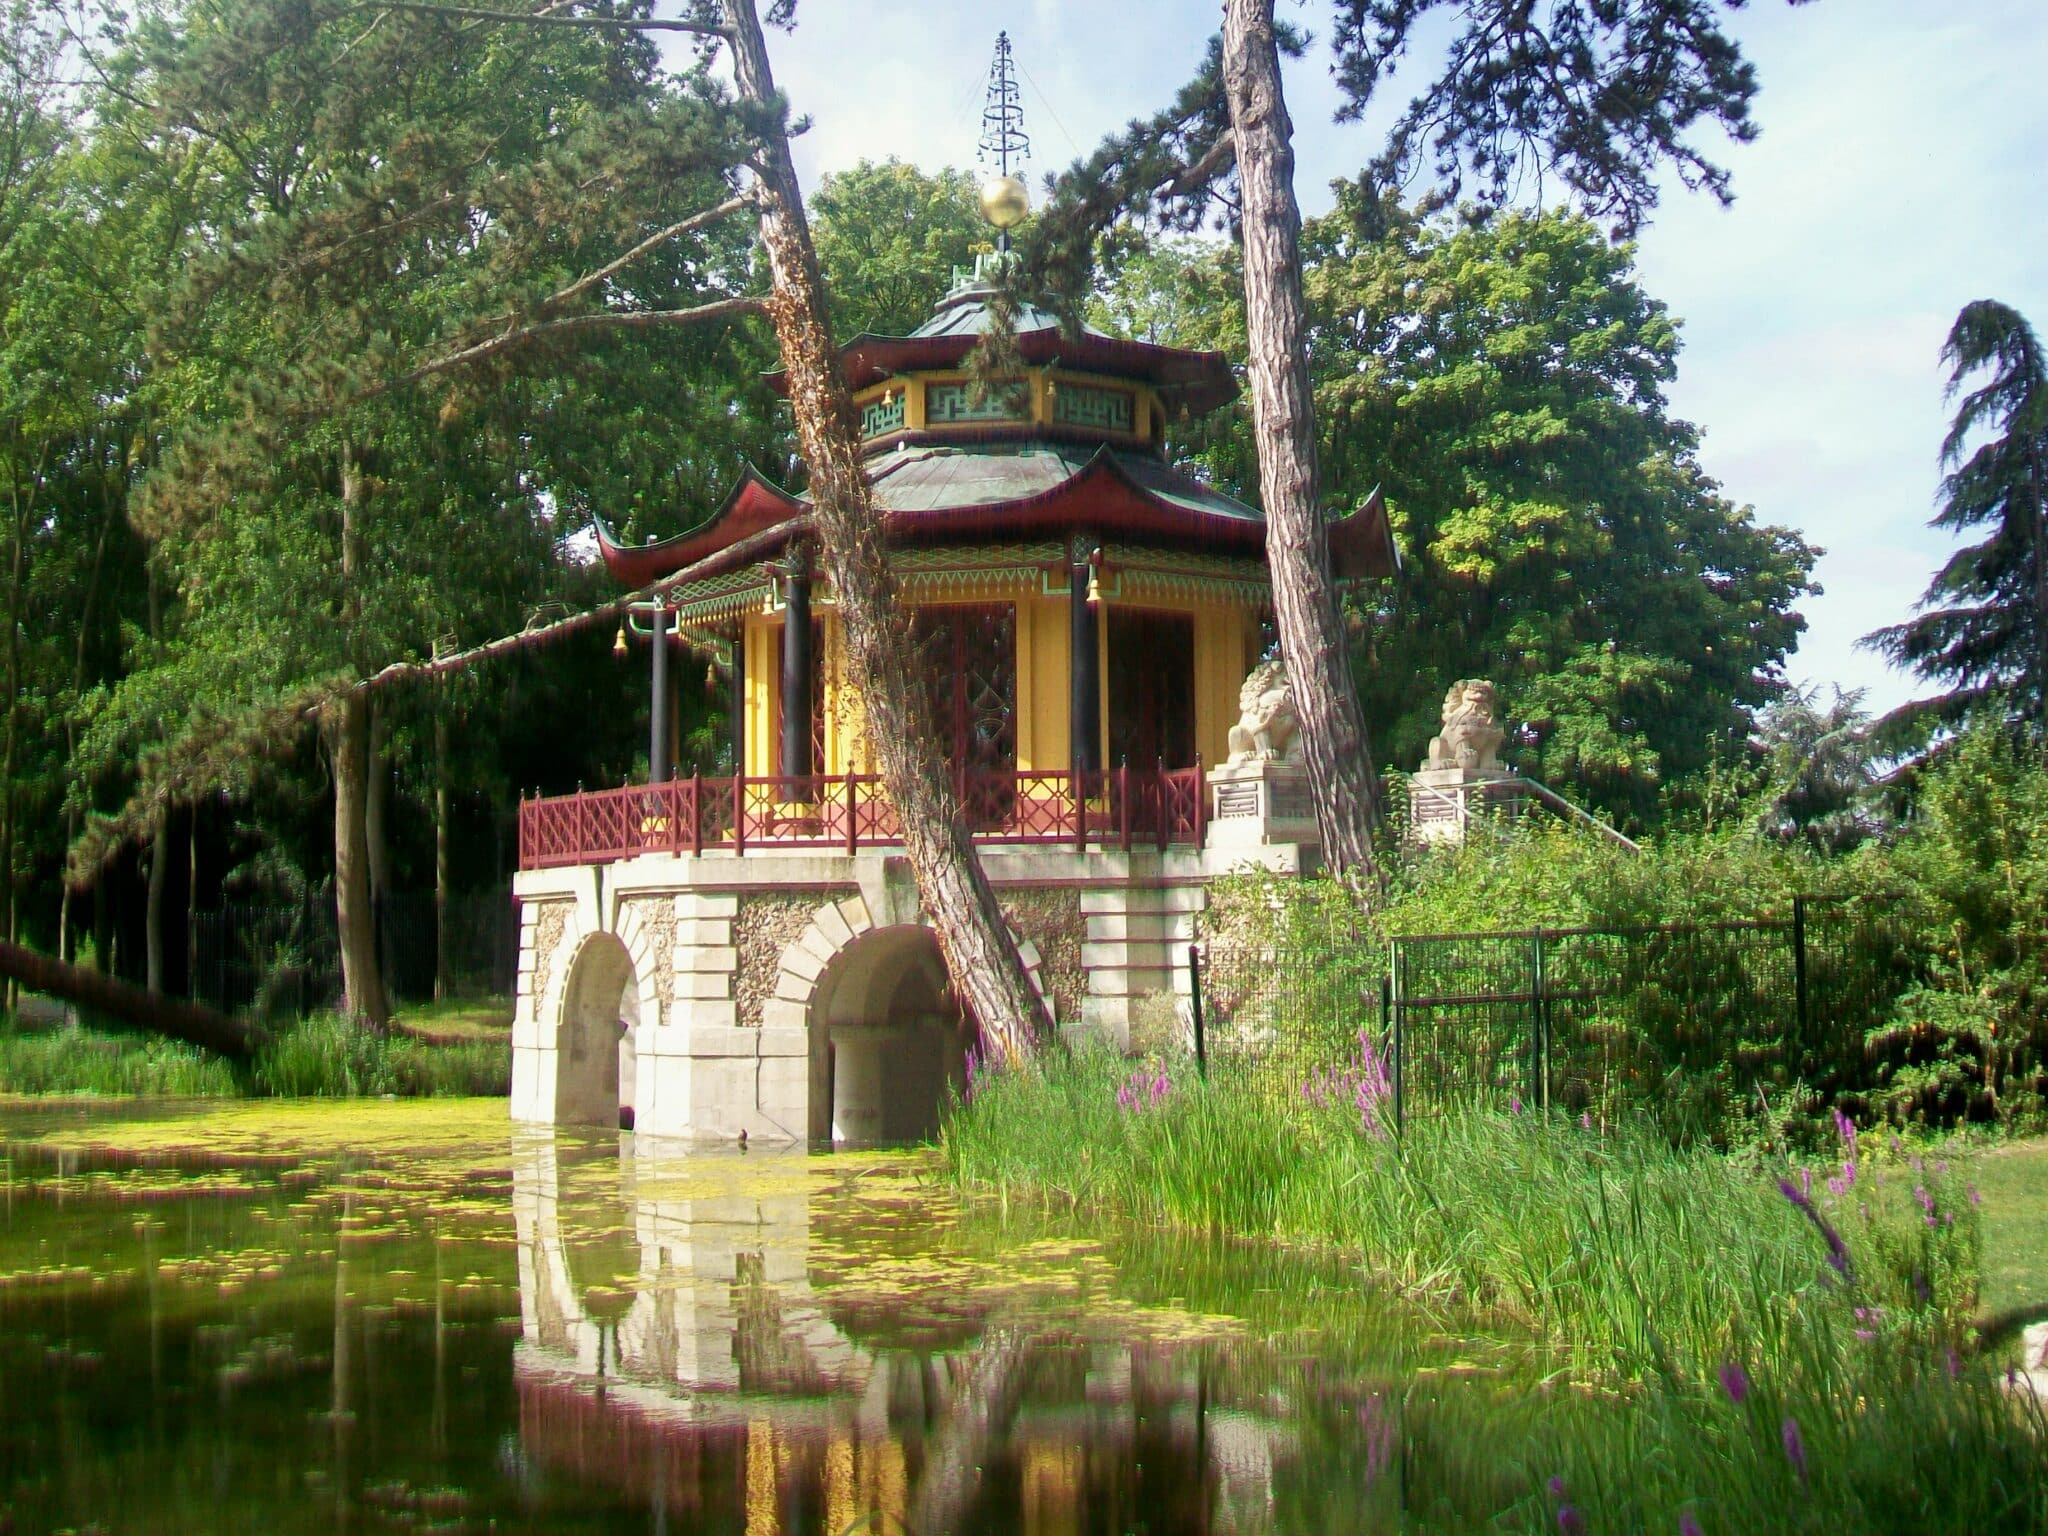 Pavillon chinois, L'Isle-Adam